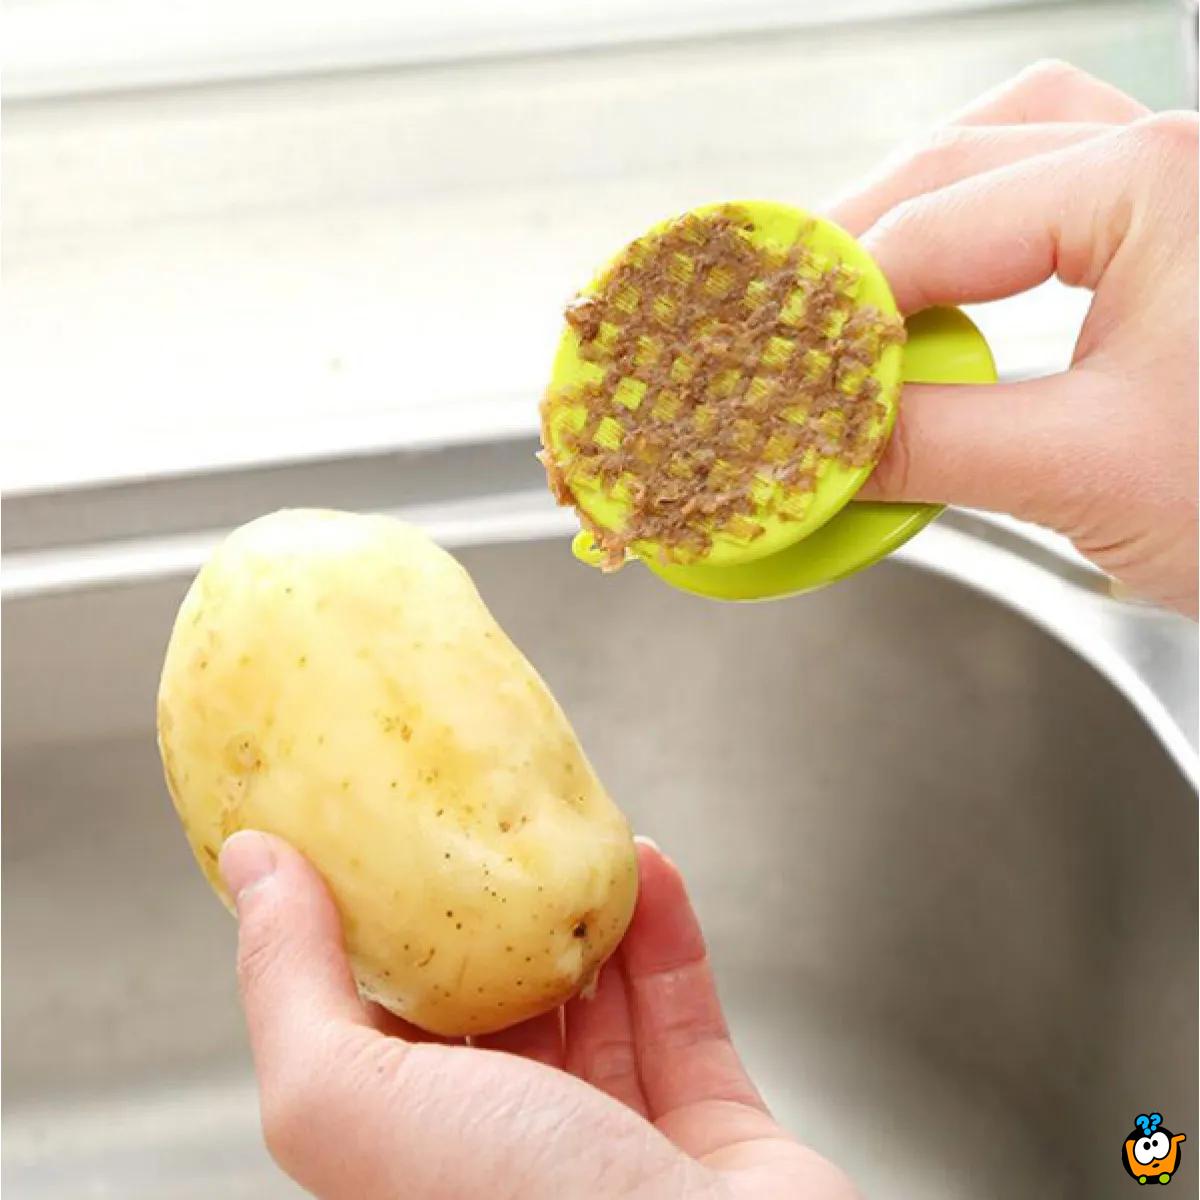  Potato peeler - Ručna ljuštilica za krompir